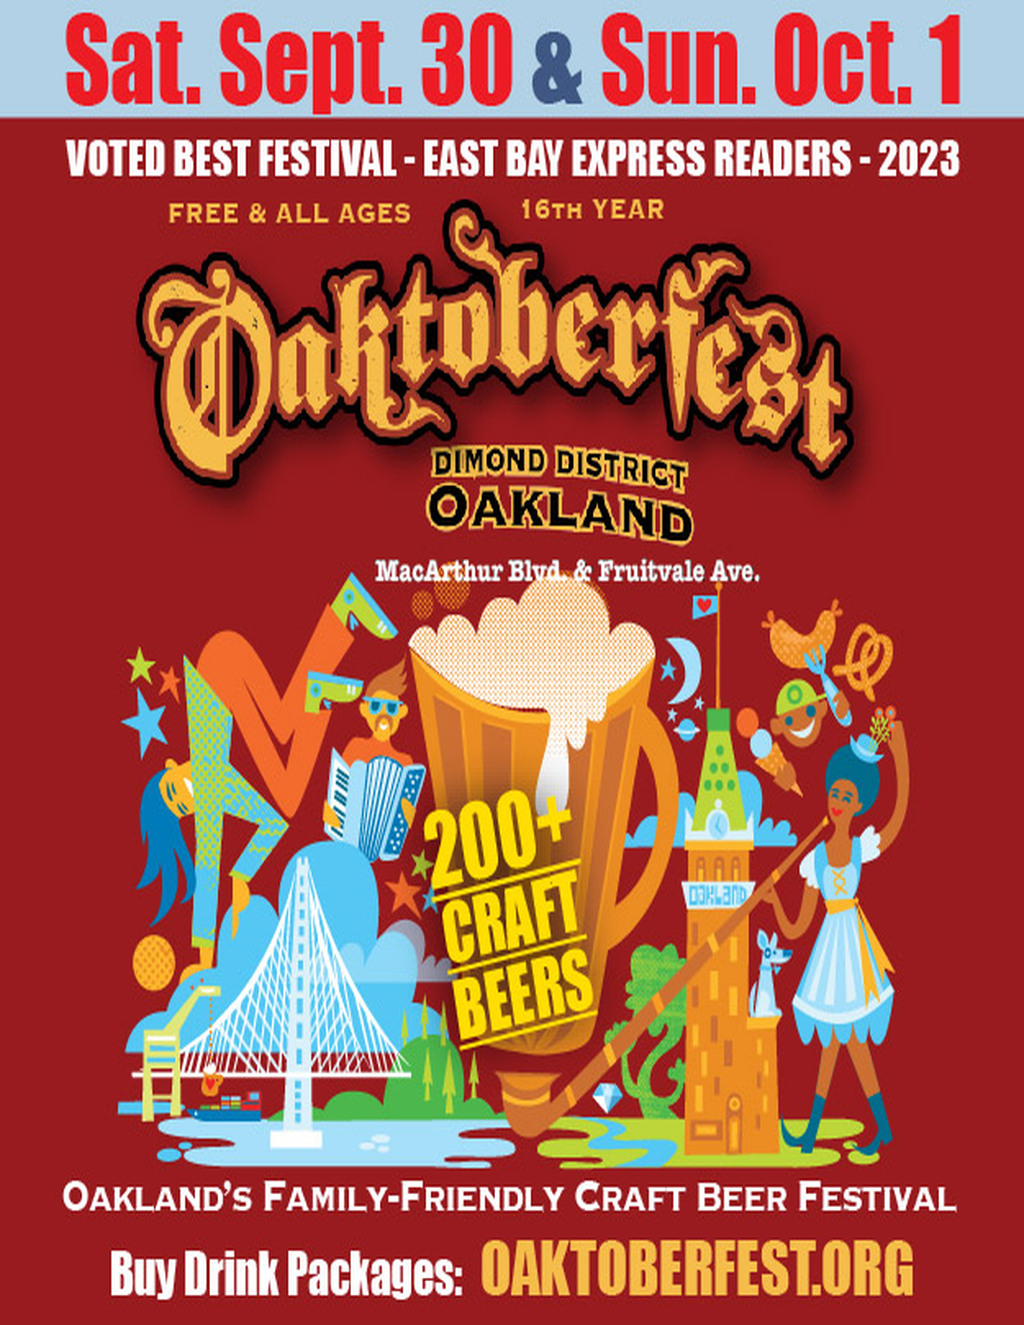 16th Year of Oaklands Family-Friendly Craft Beer Festival: OAKTOBERFEST promotion flier on Digifli.com